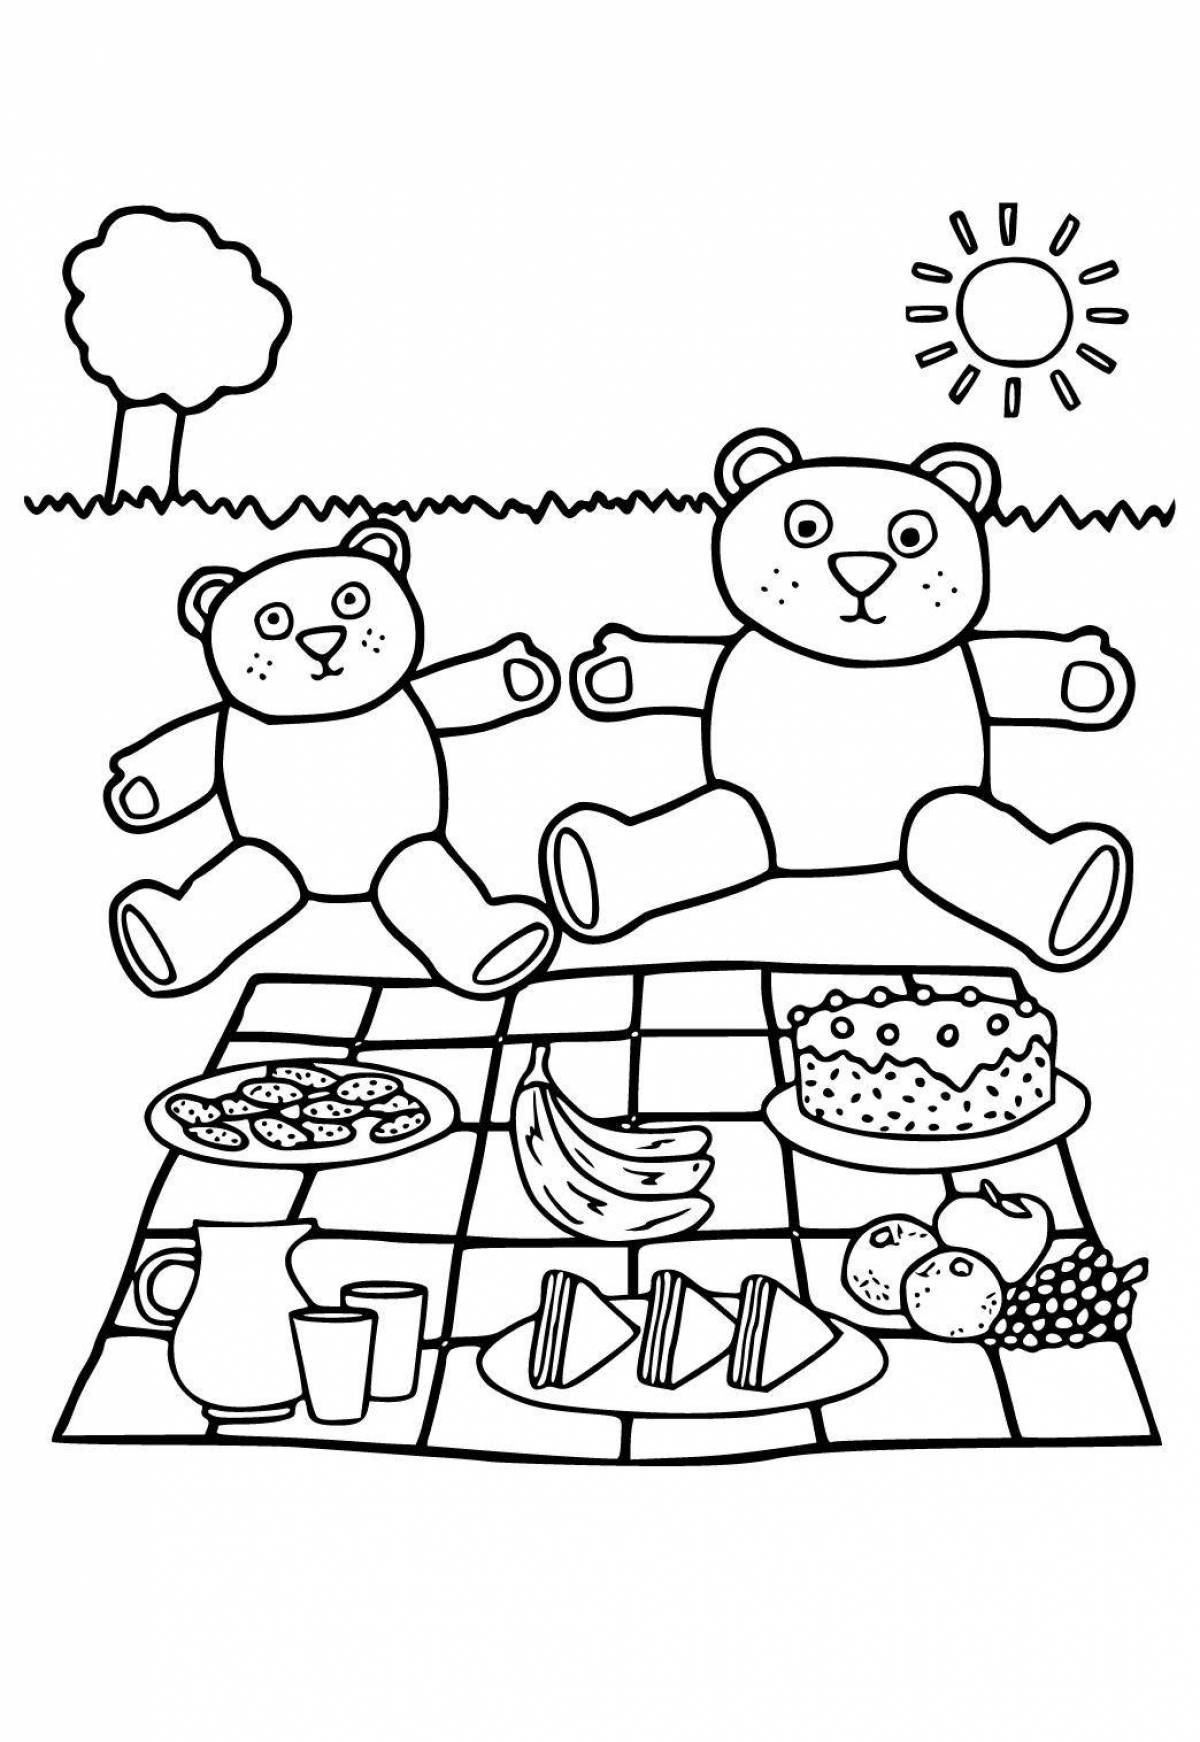 Яркая раскраска еда для детей 3-4 лет